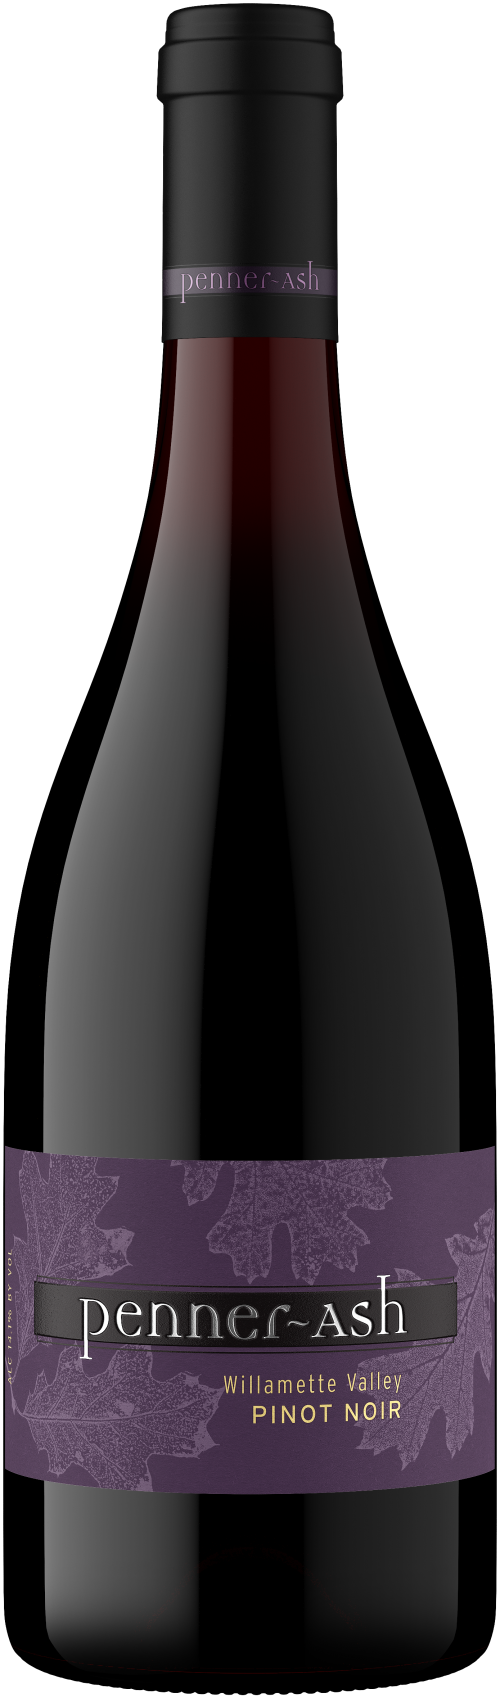 Penner Ash Wine Bottle